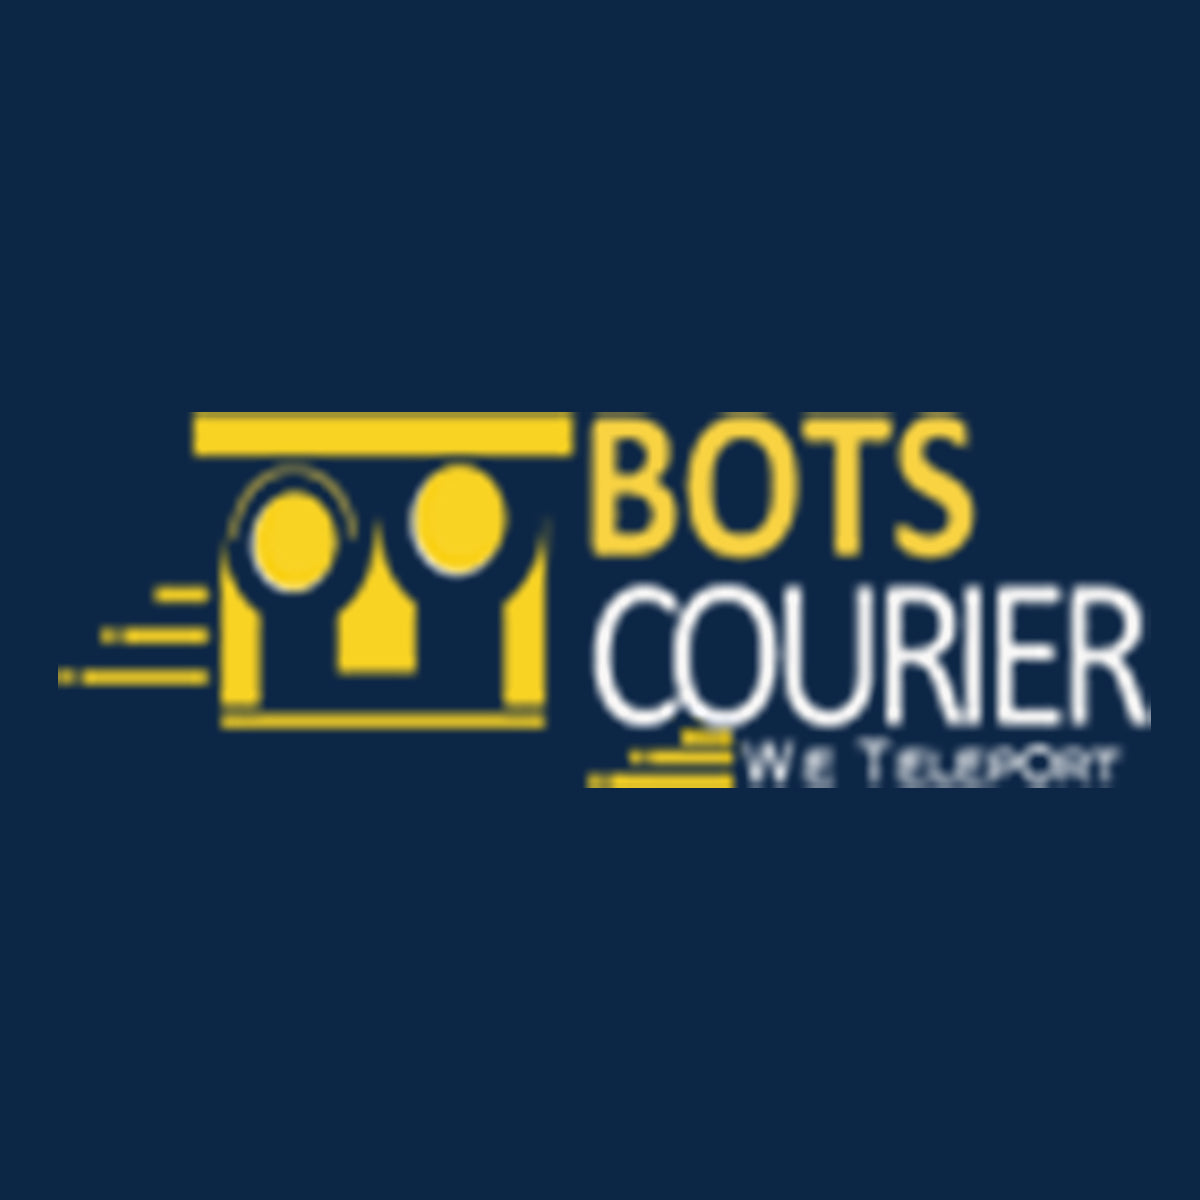 Bots Courier